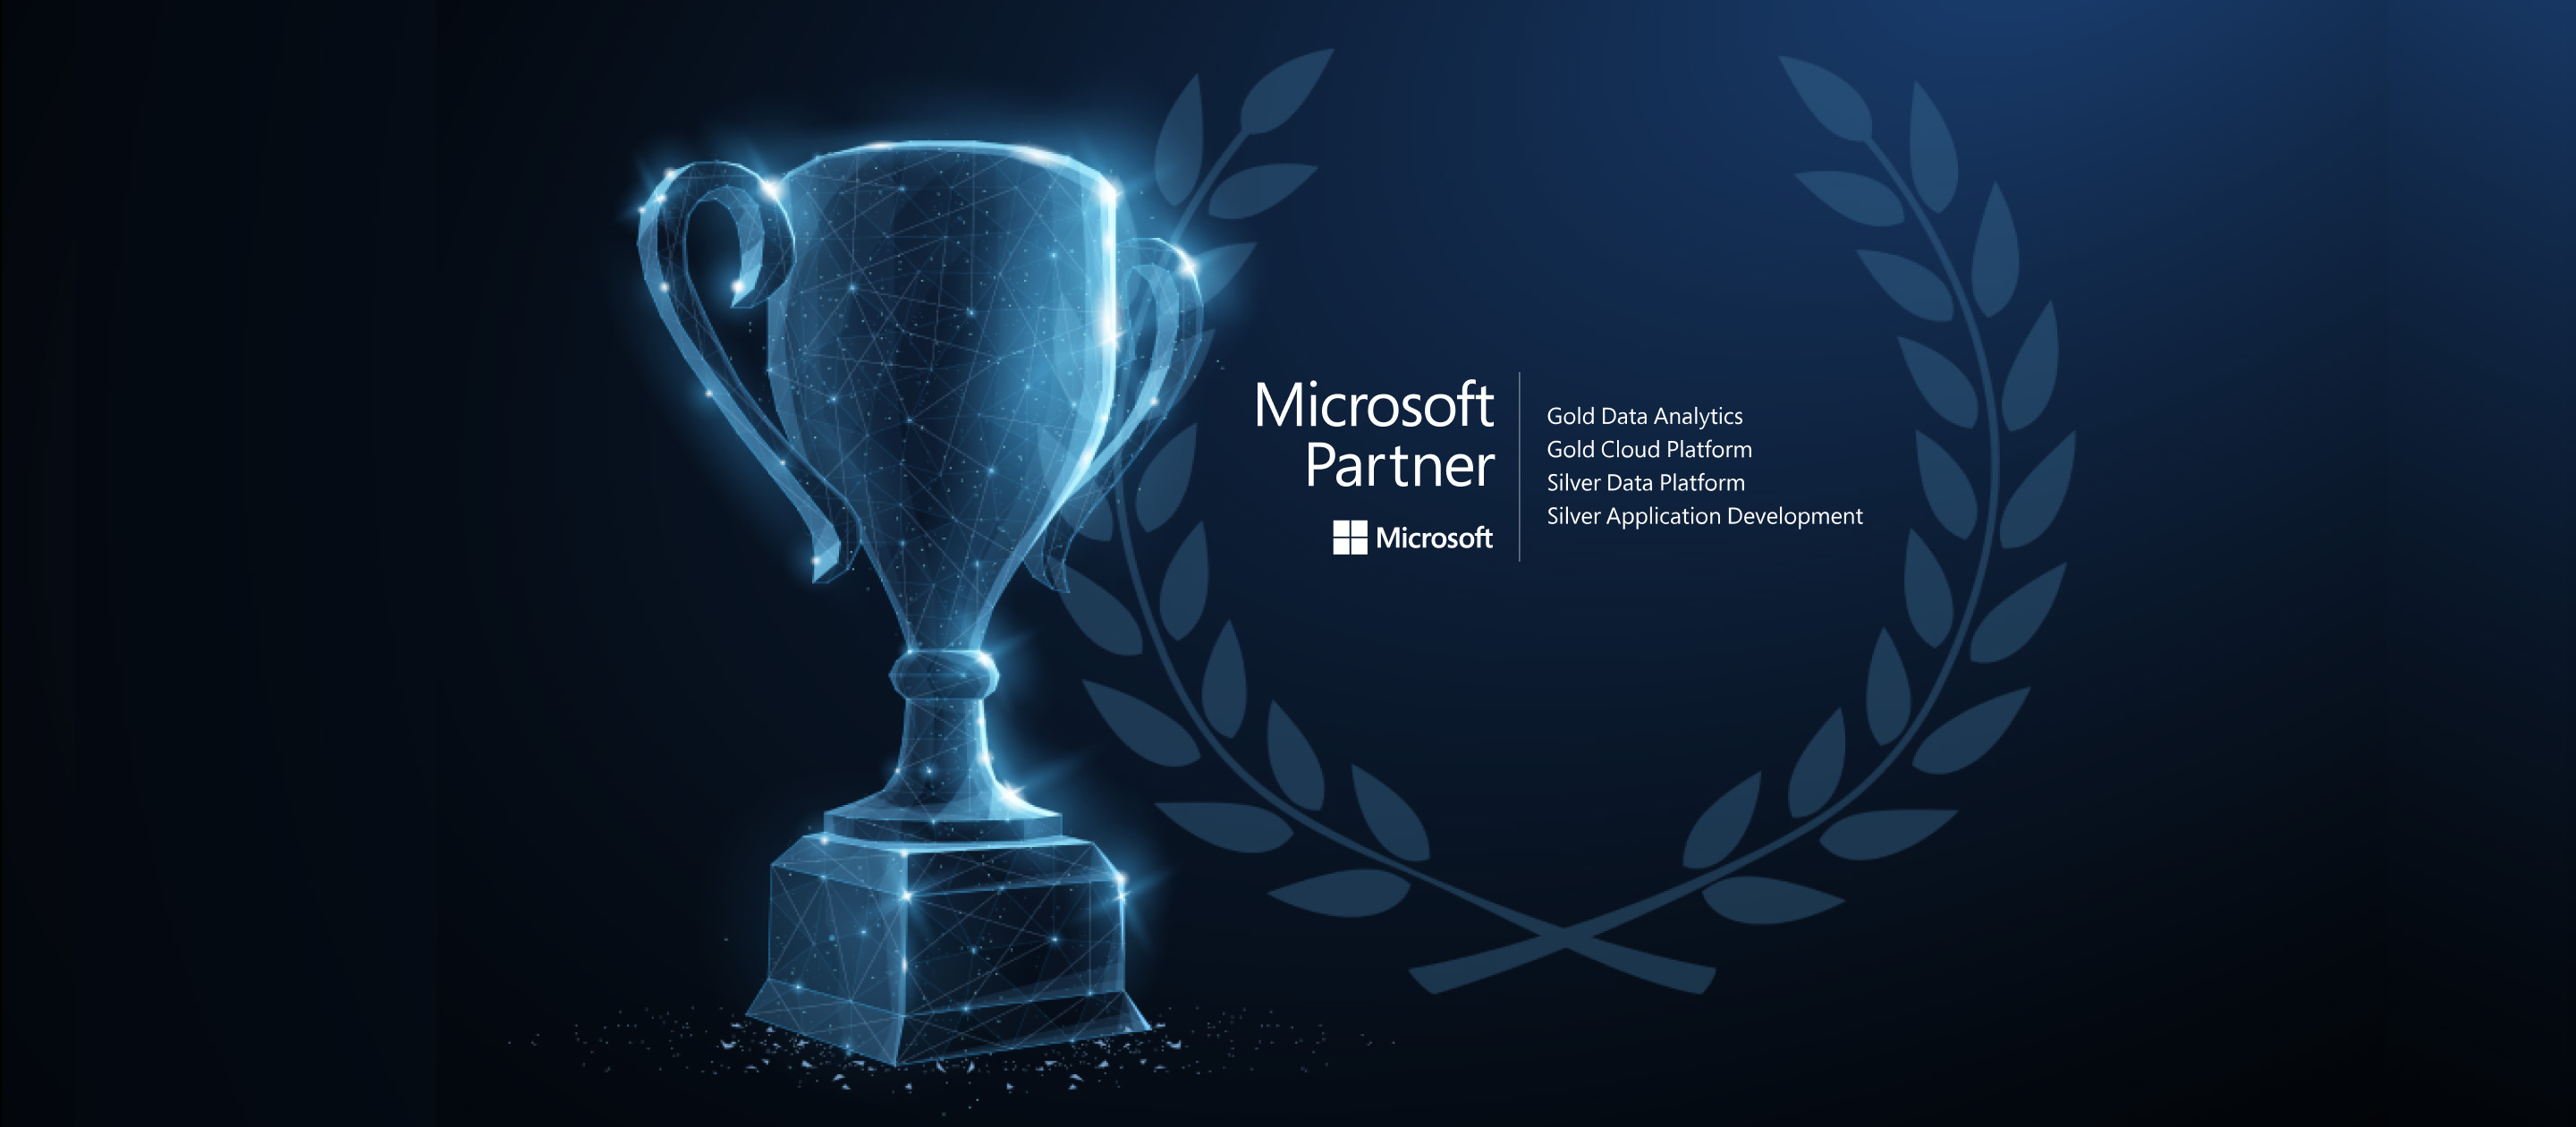 Satori earned new Microsoft Competencies